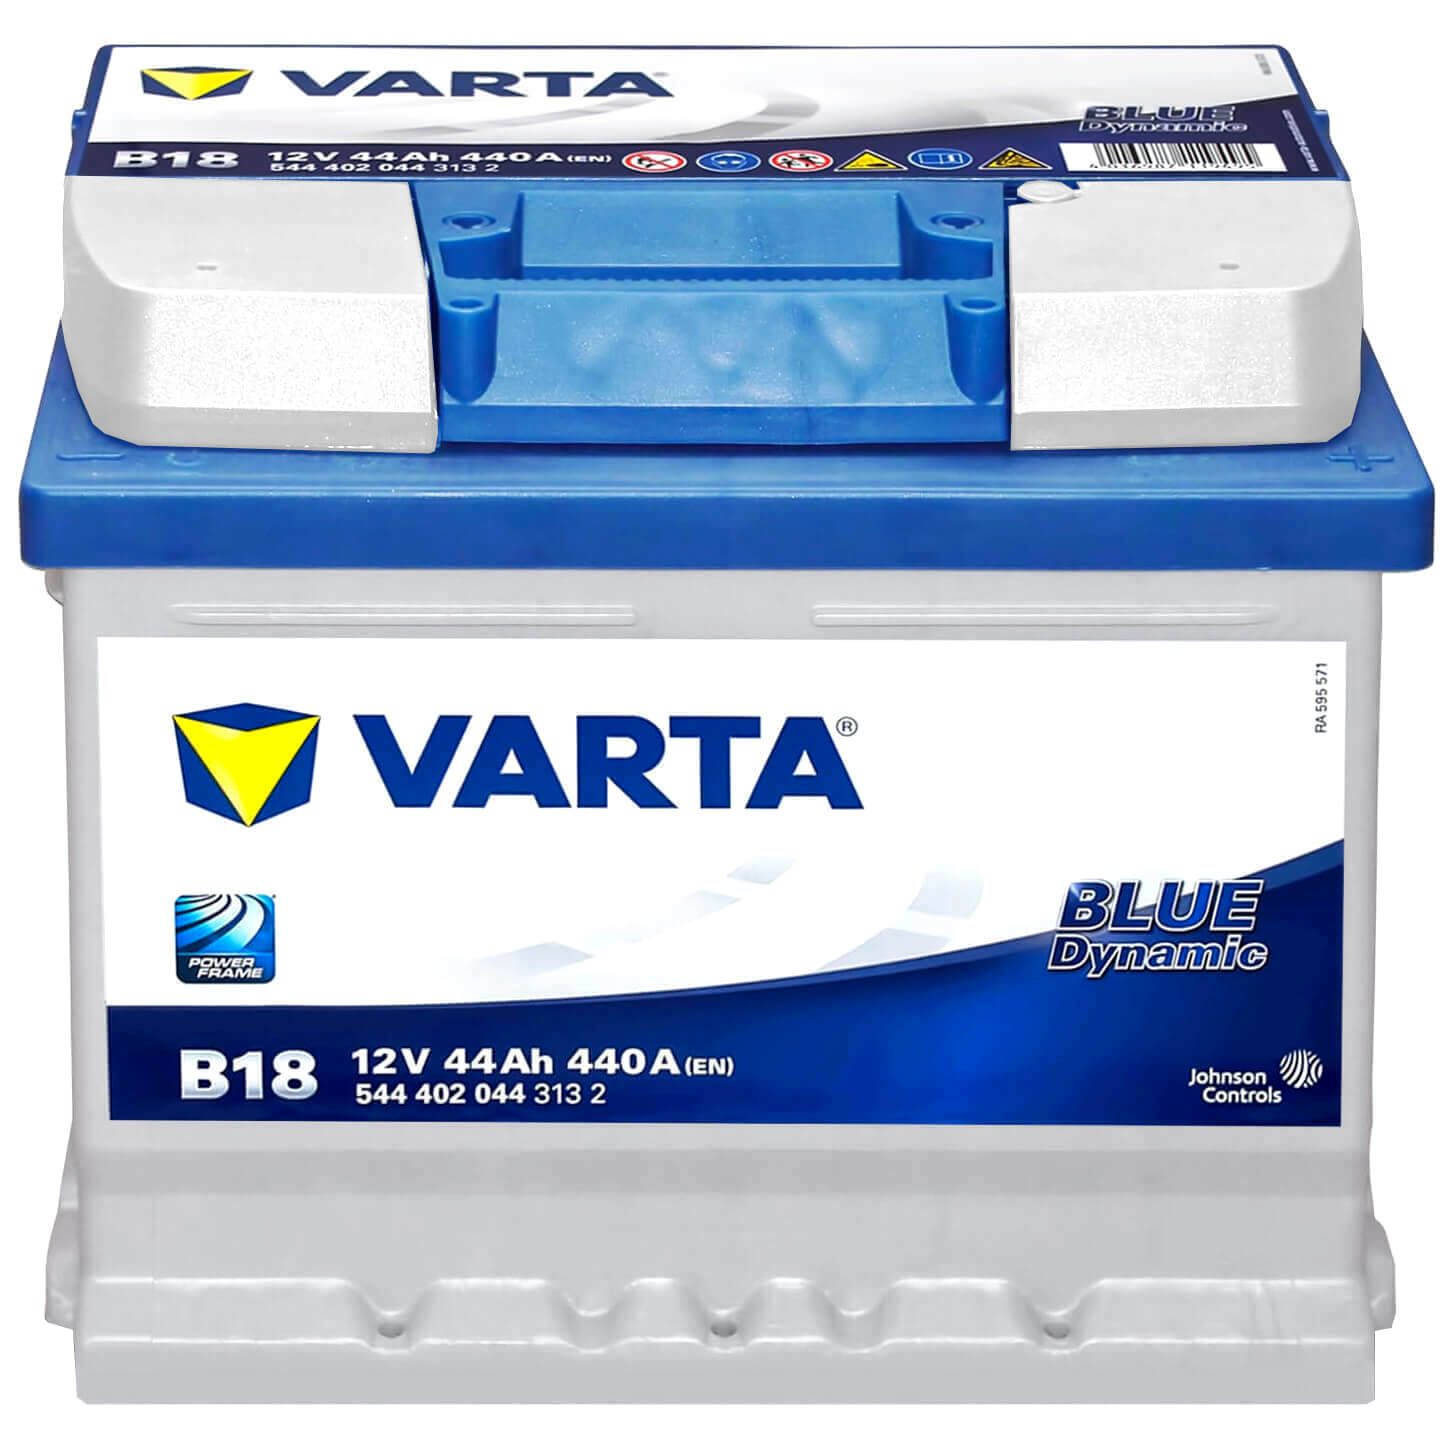 Autobaterie VARTA BLUE Dynamic 12V 44Ah 440A B18 (207x175x175) 544